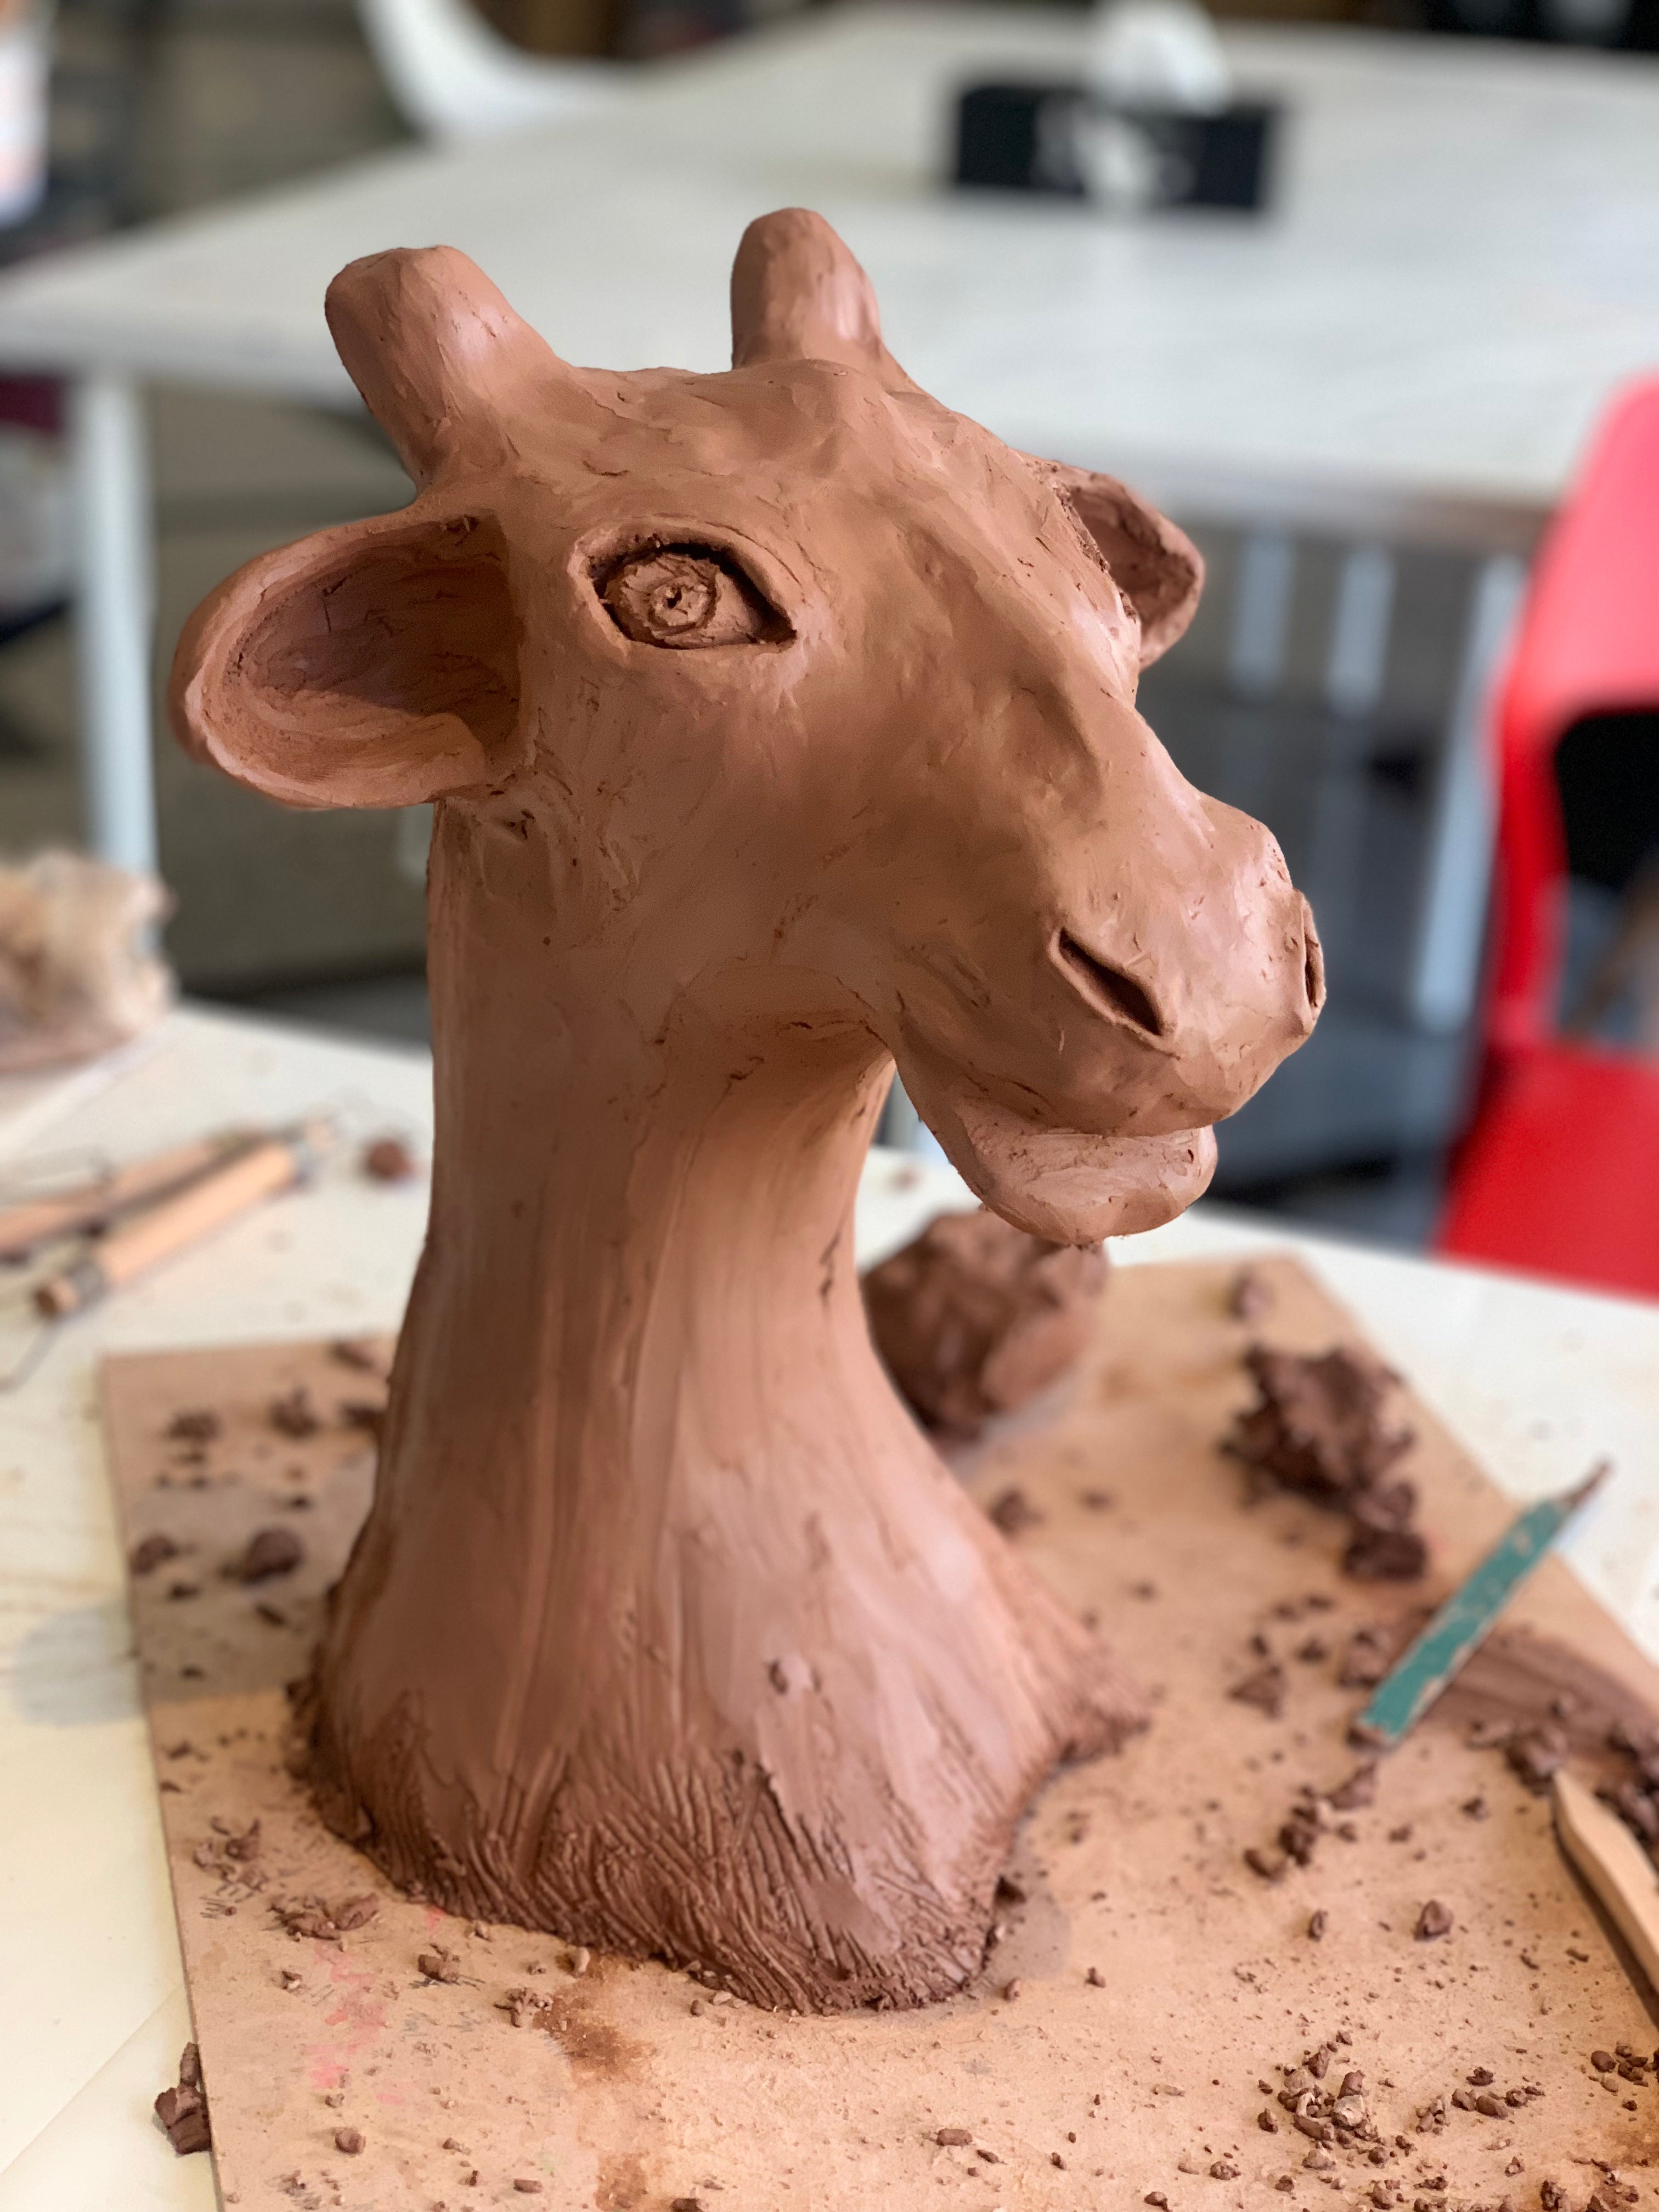 Clay sculpting OR Clay & Gypsum! By Mariam Faried